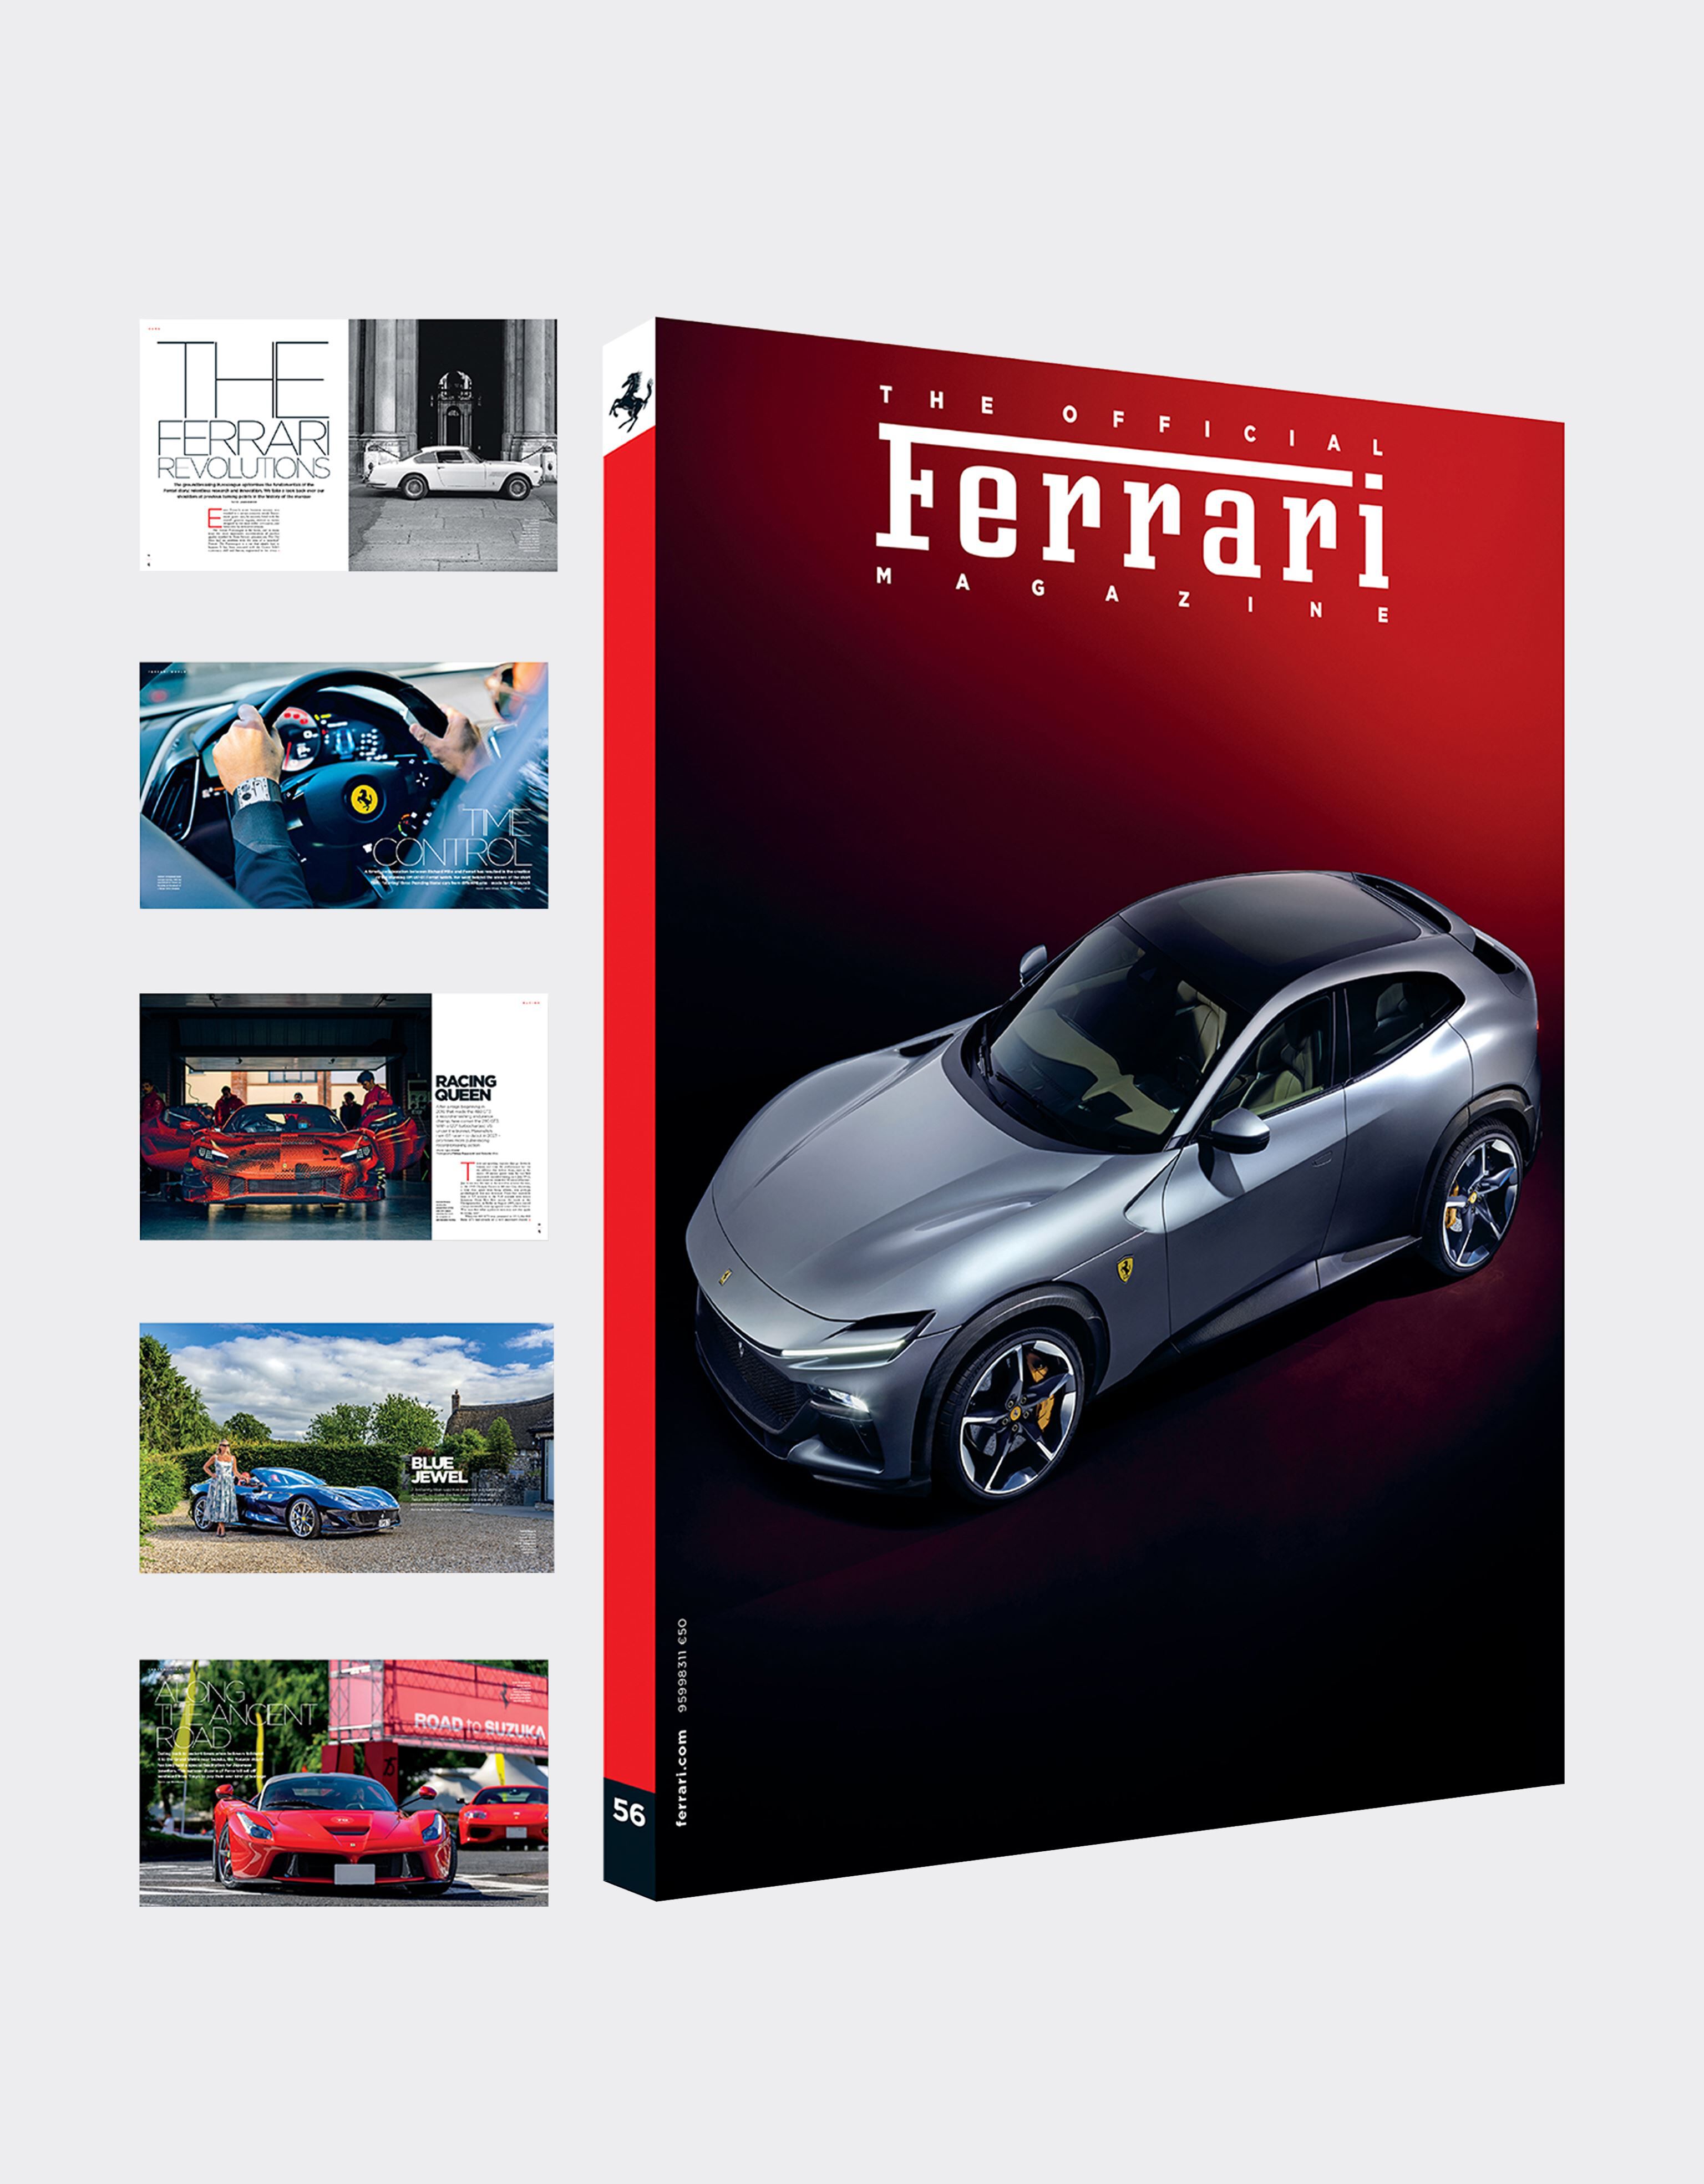 Ferrari The Official Ferrari Magazine número 56 Negro 47387f